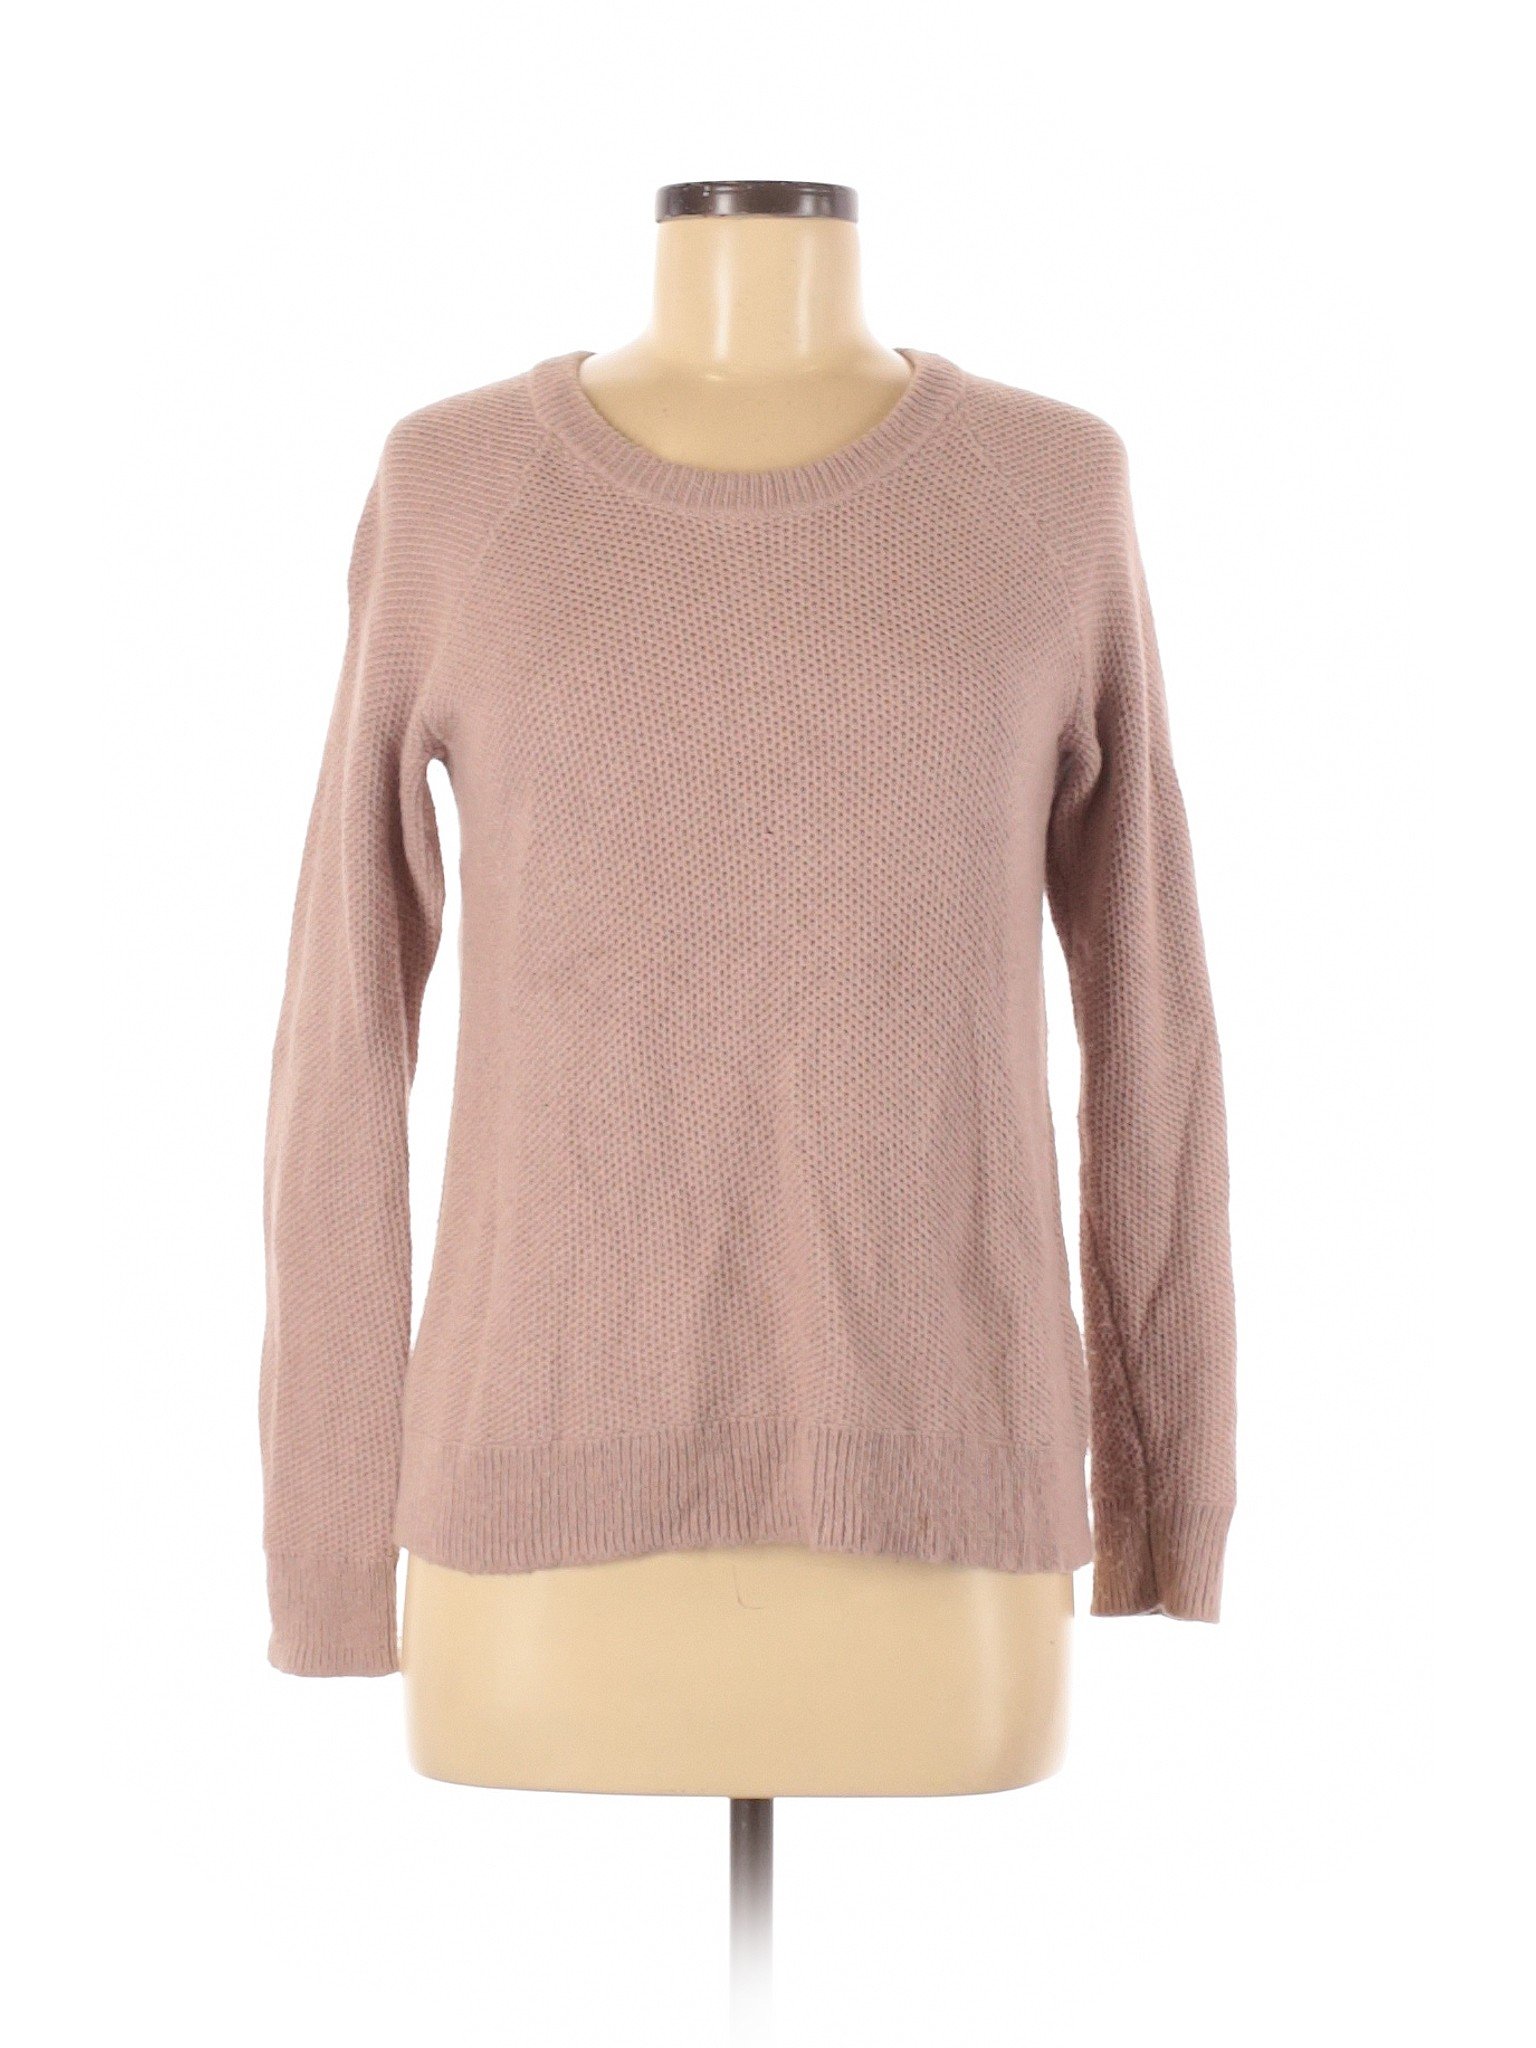 Madewell Women Pink Pullover Sweater XS | eBay